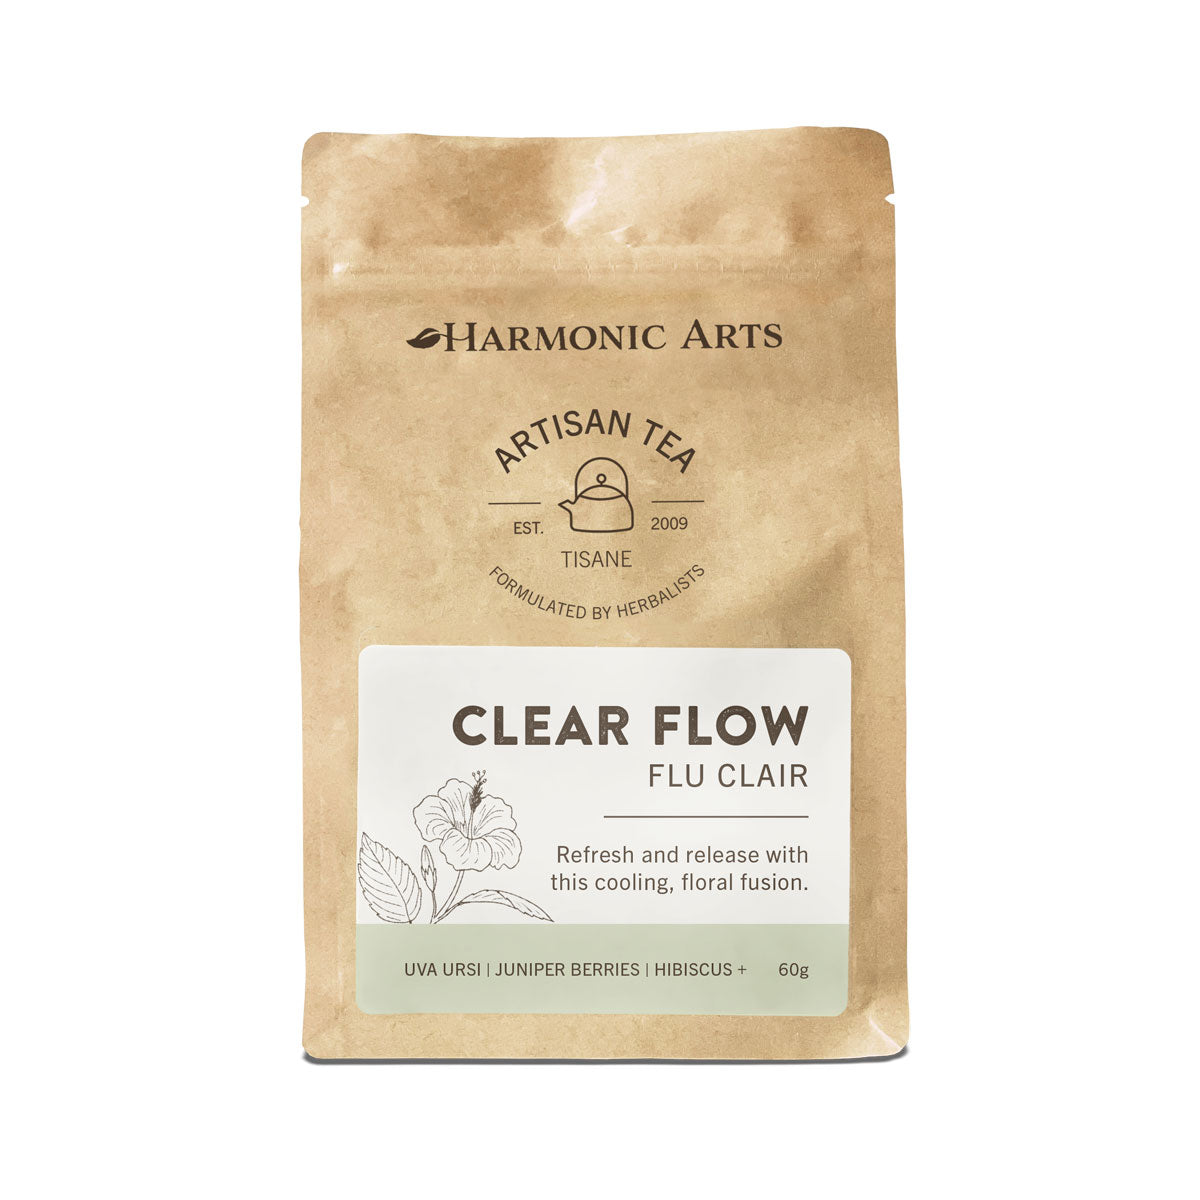 Harmonic Arts Artisan Tea - Clear Flow (60g) - Lifestyle Markets